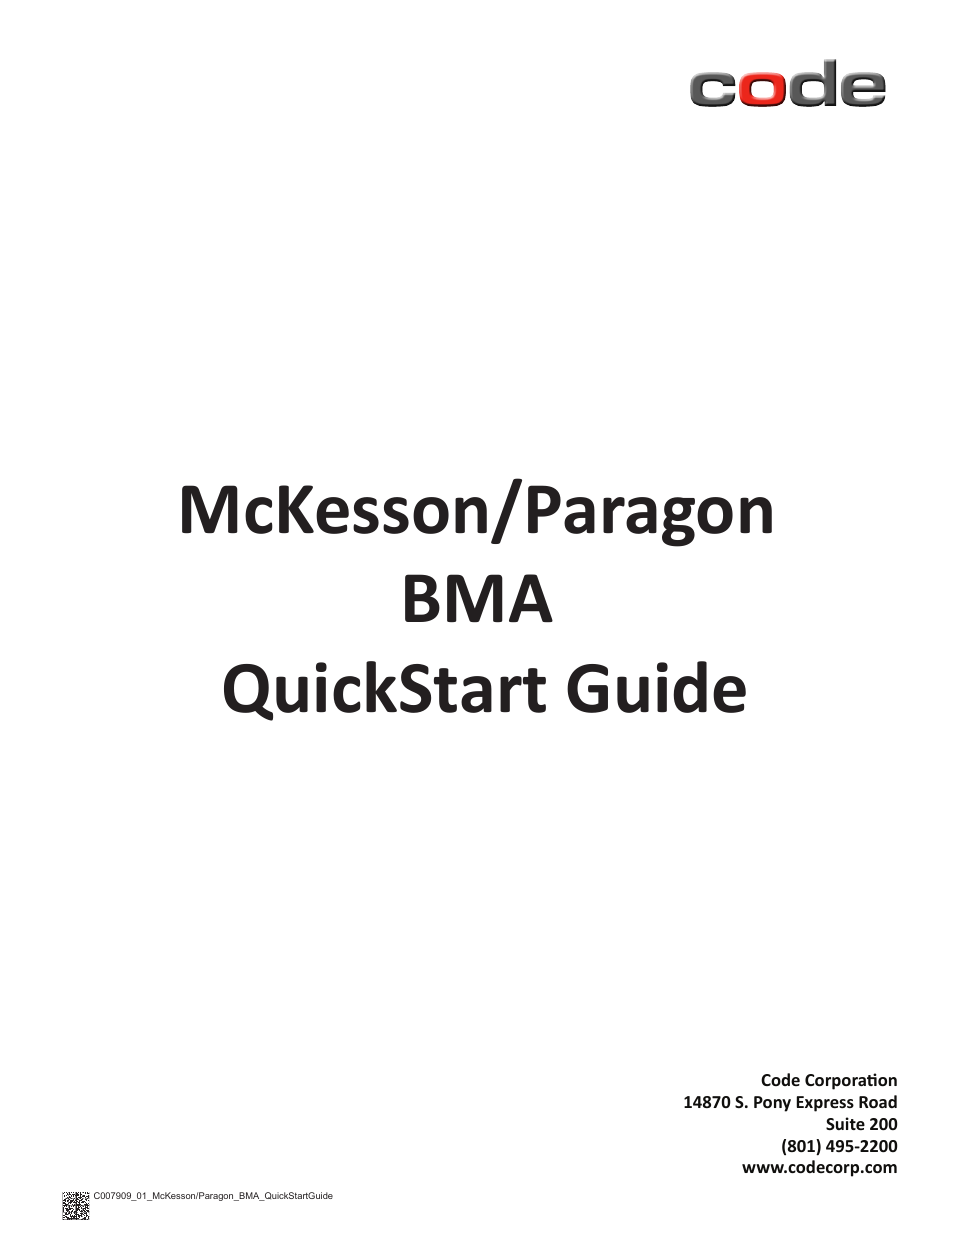 CR1200 McKesson Paragon Quick Start